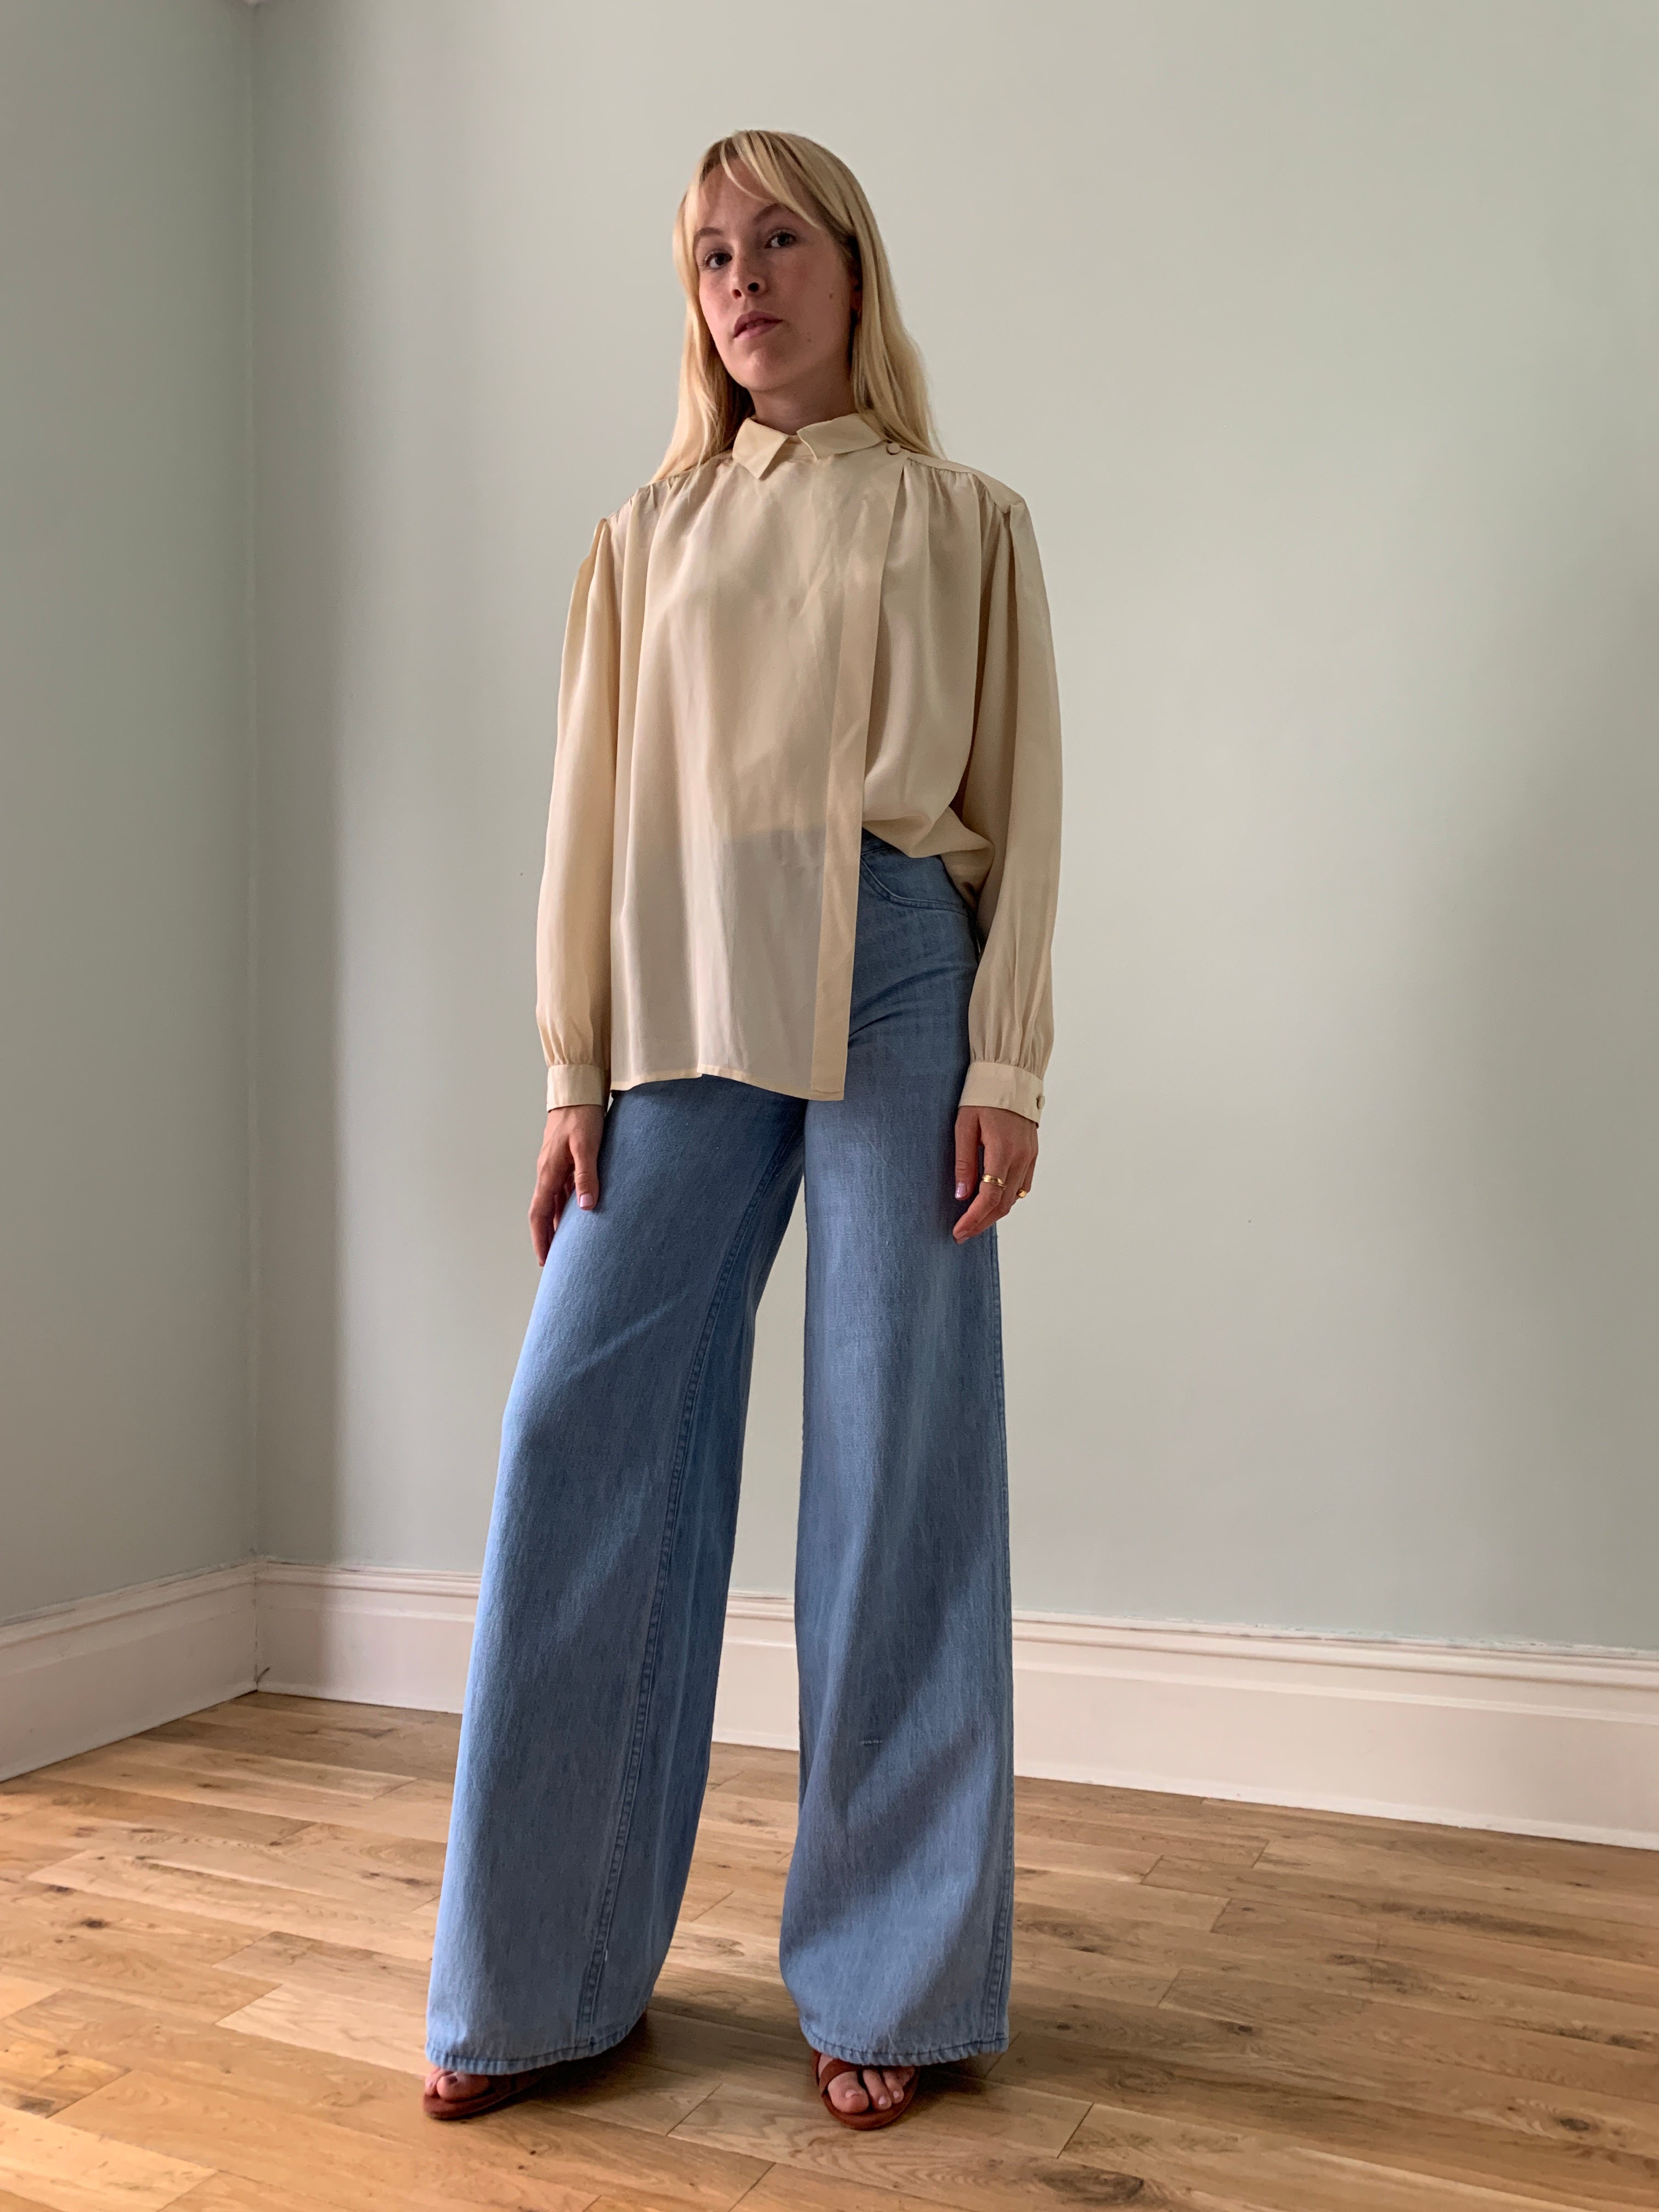 Vintage silk 80s blouse